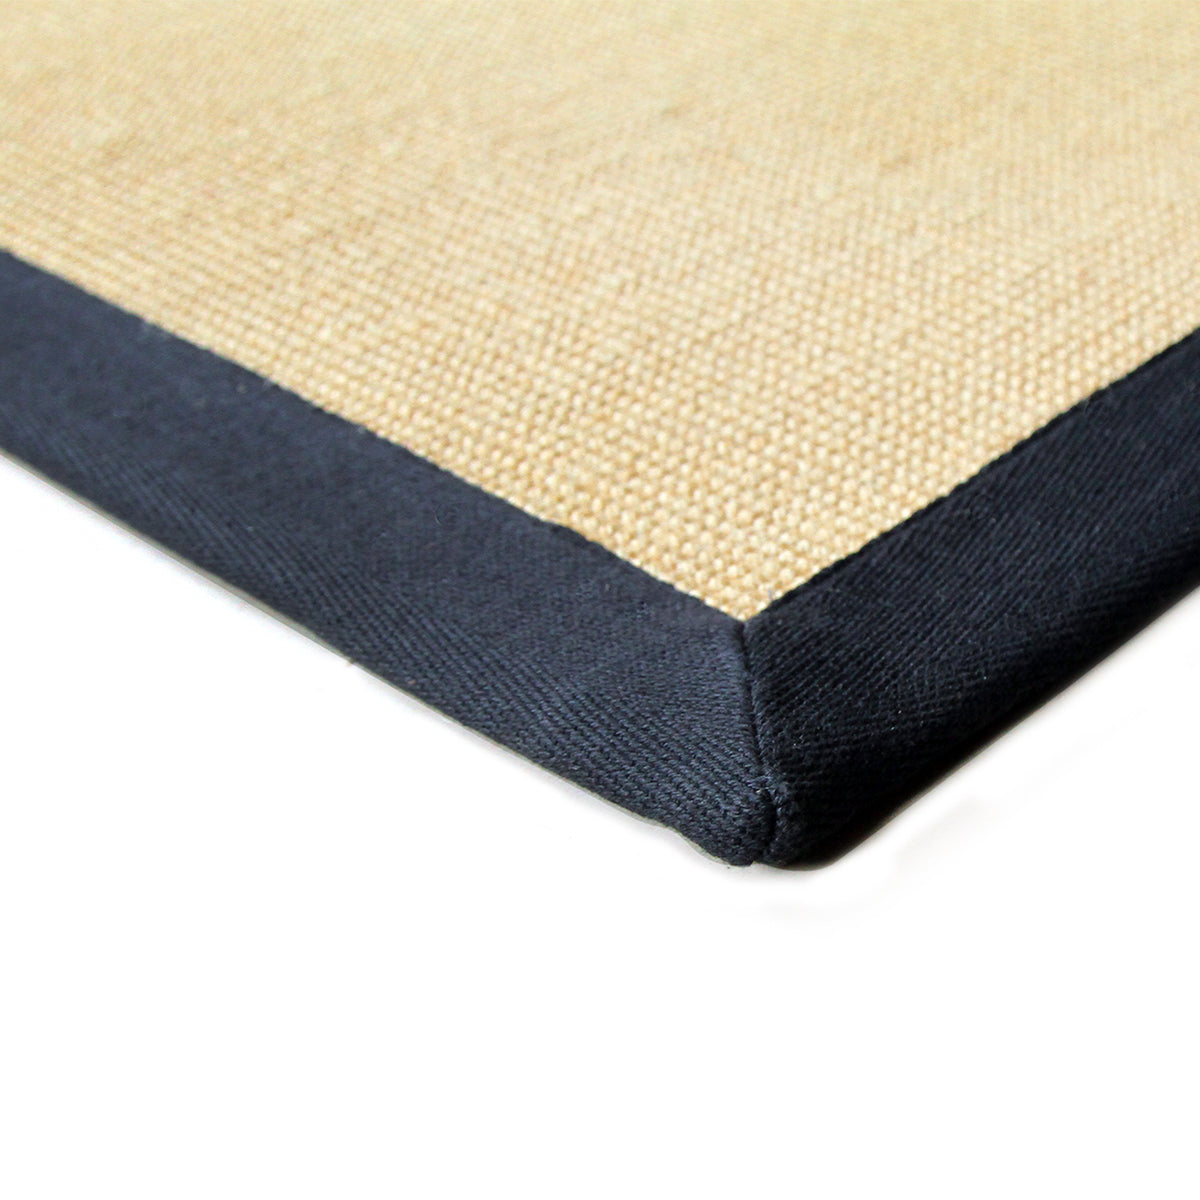 Handwoven Natural Jute Floor Mat with Black Border - OnlyMat